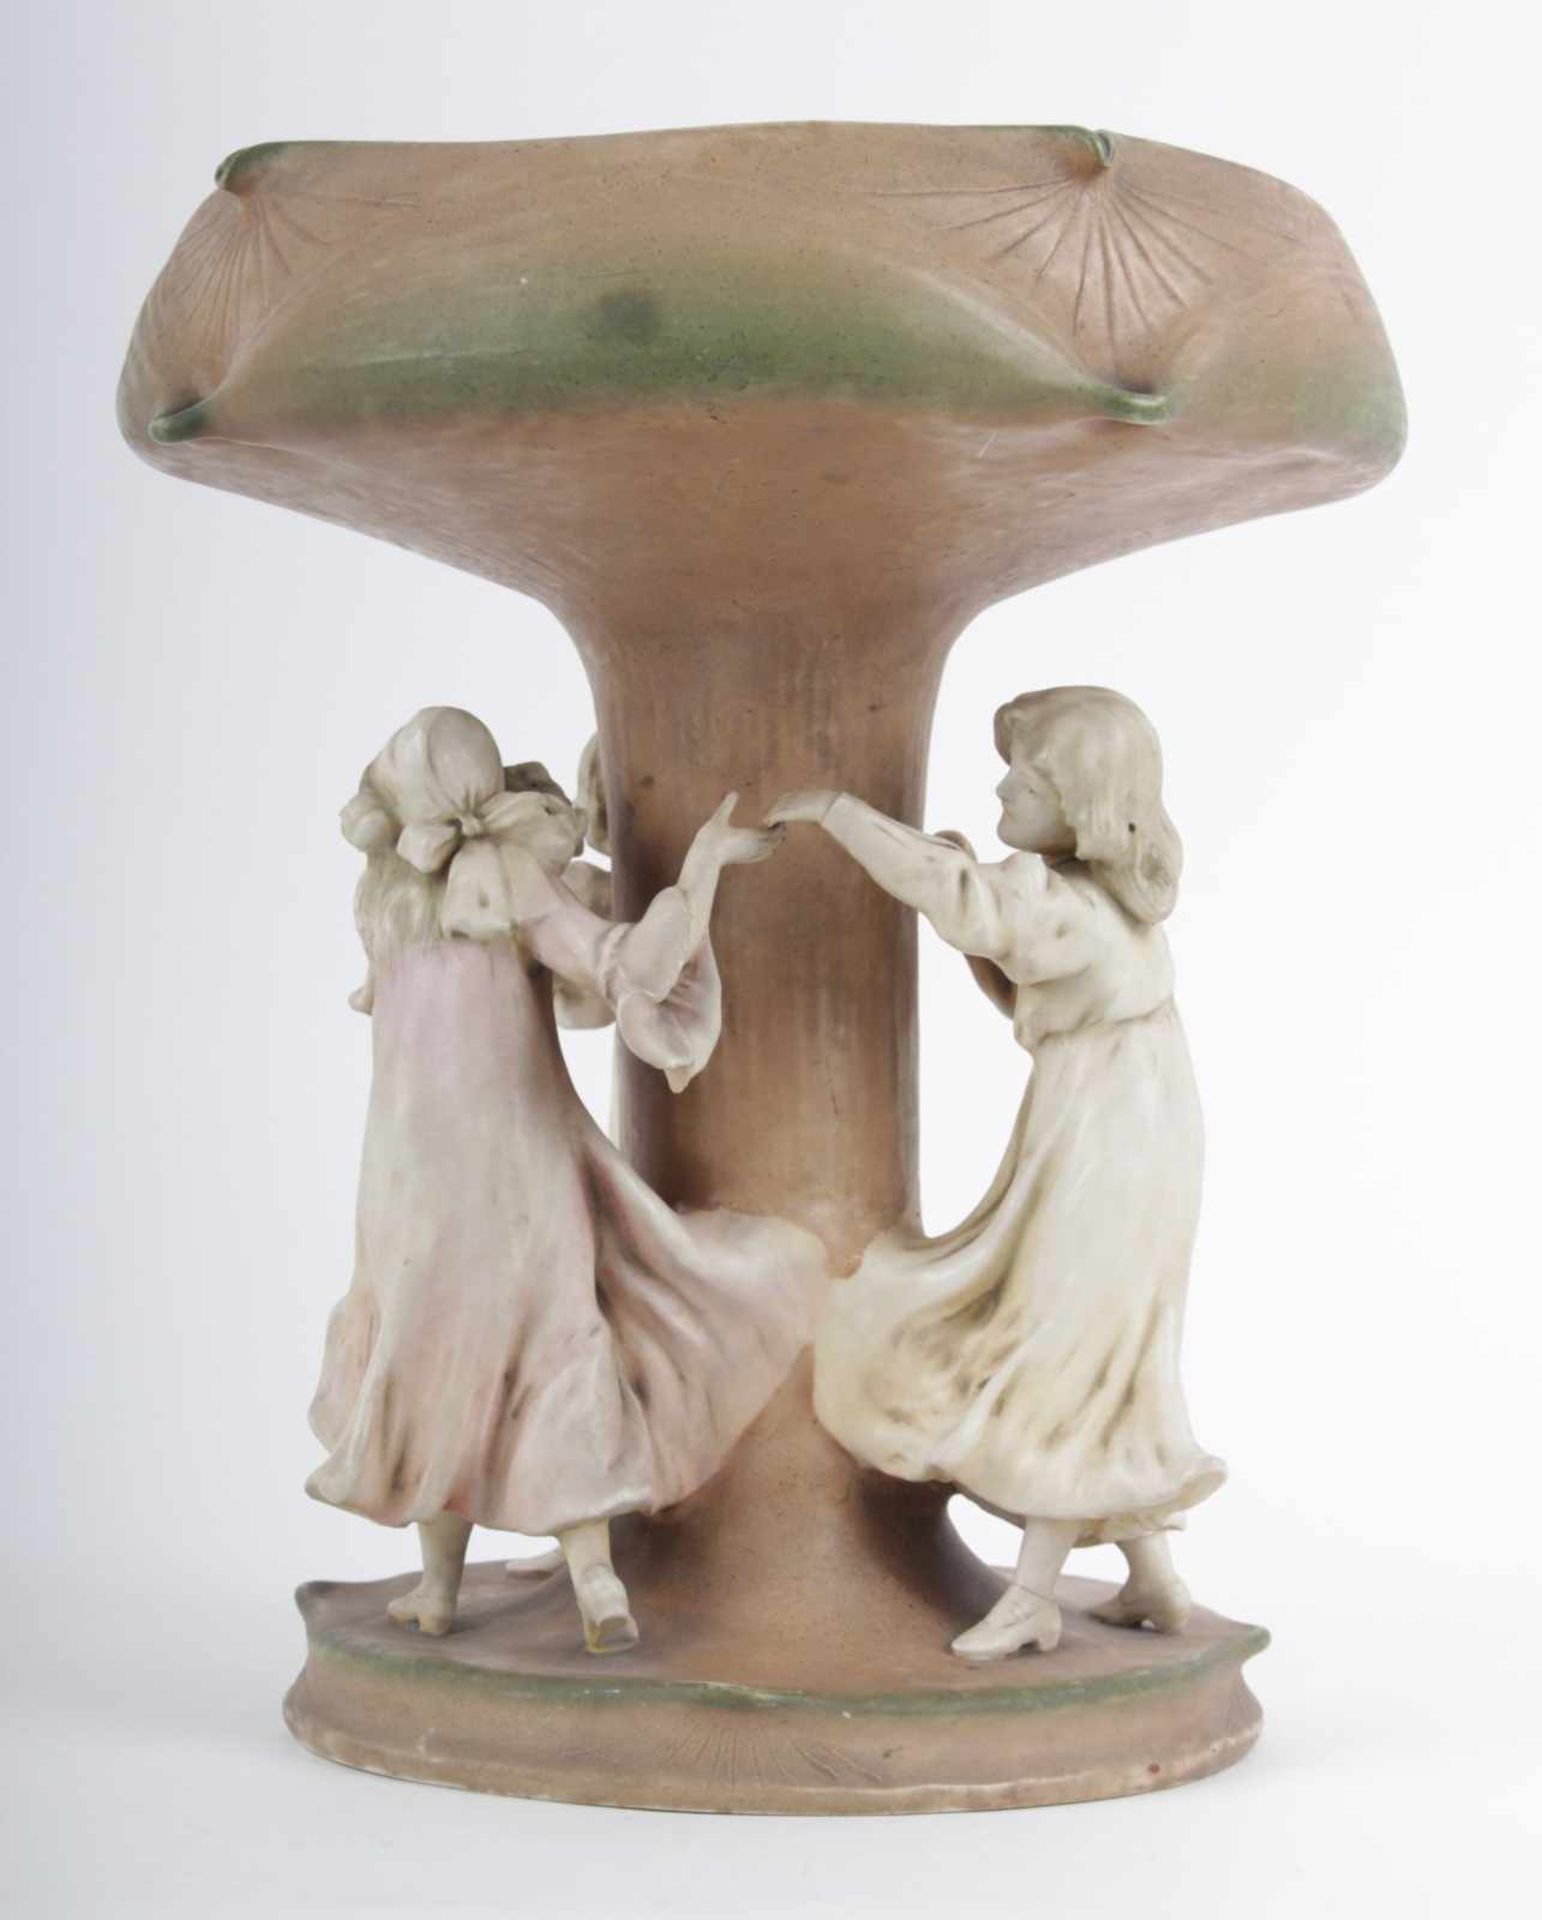 Trnovany Art Nouveau Bowl Amphora Ernst Wahliss, Trnovany near Teplice (Bohemia), pottery, decorated - Bild 3 aus 7